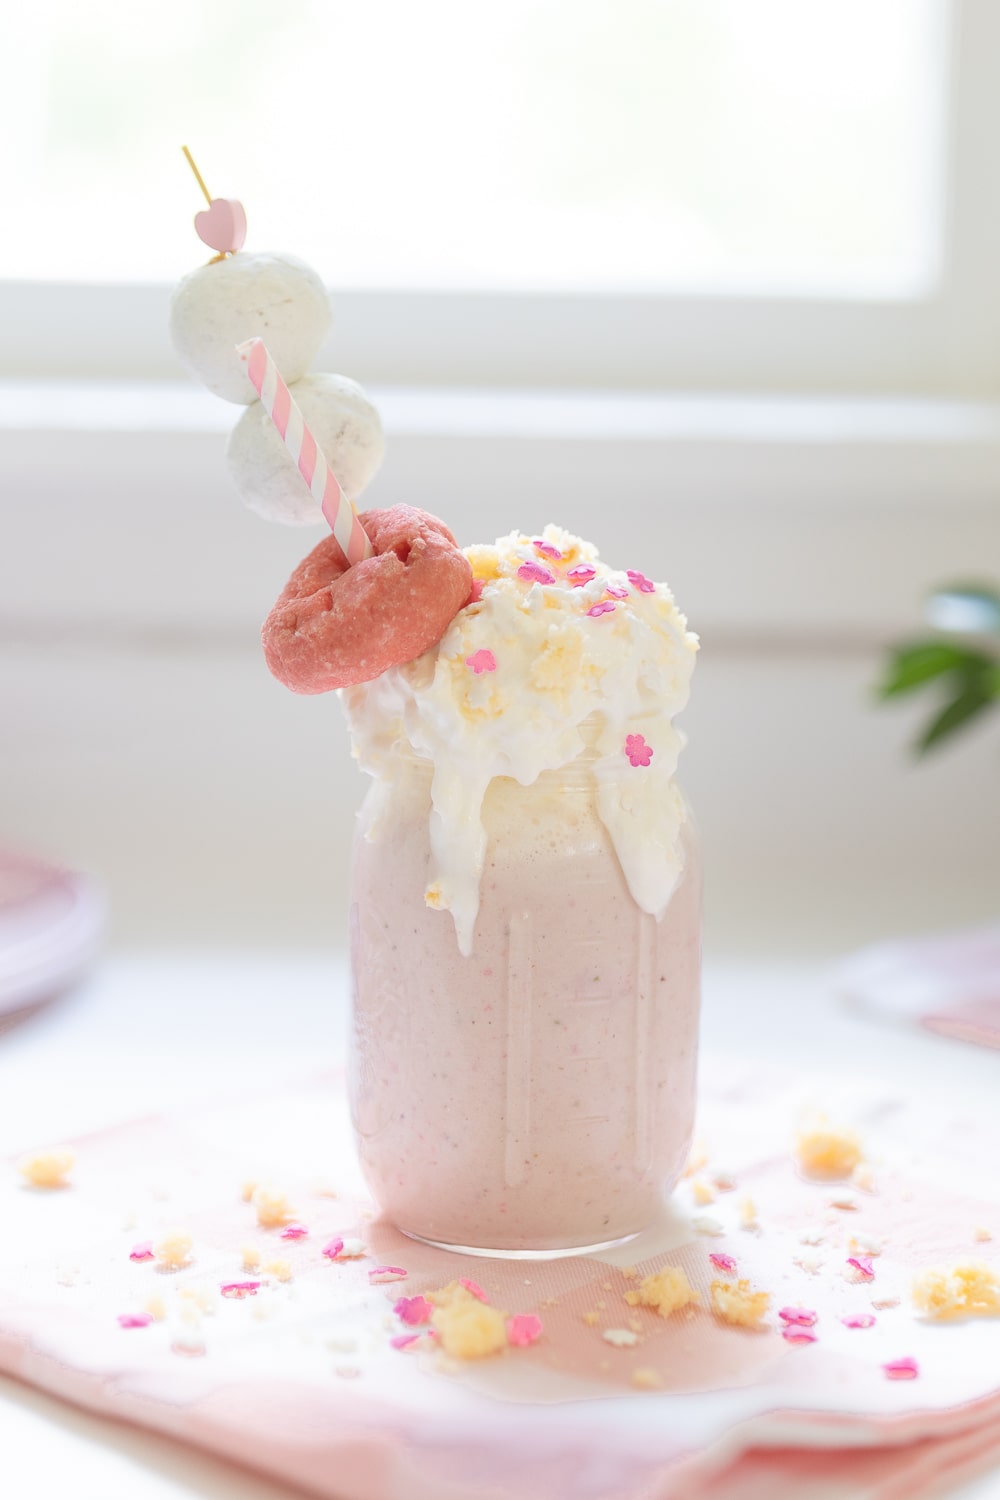 Strawberry shortcake milkshake recipe created by blogger Stephanie Ziajka on Diary of a Debutante